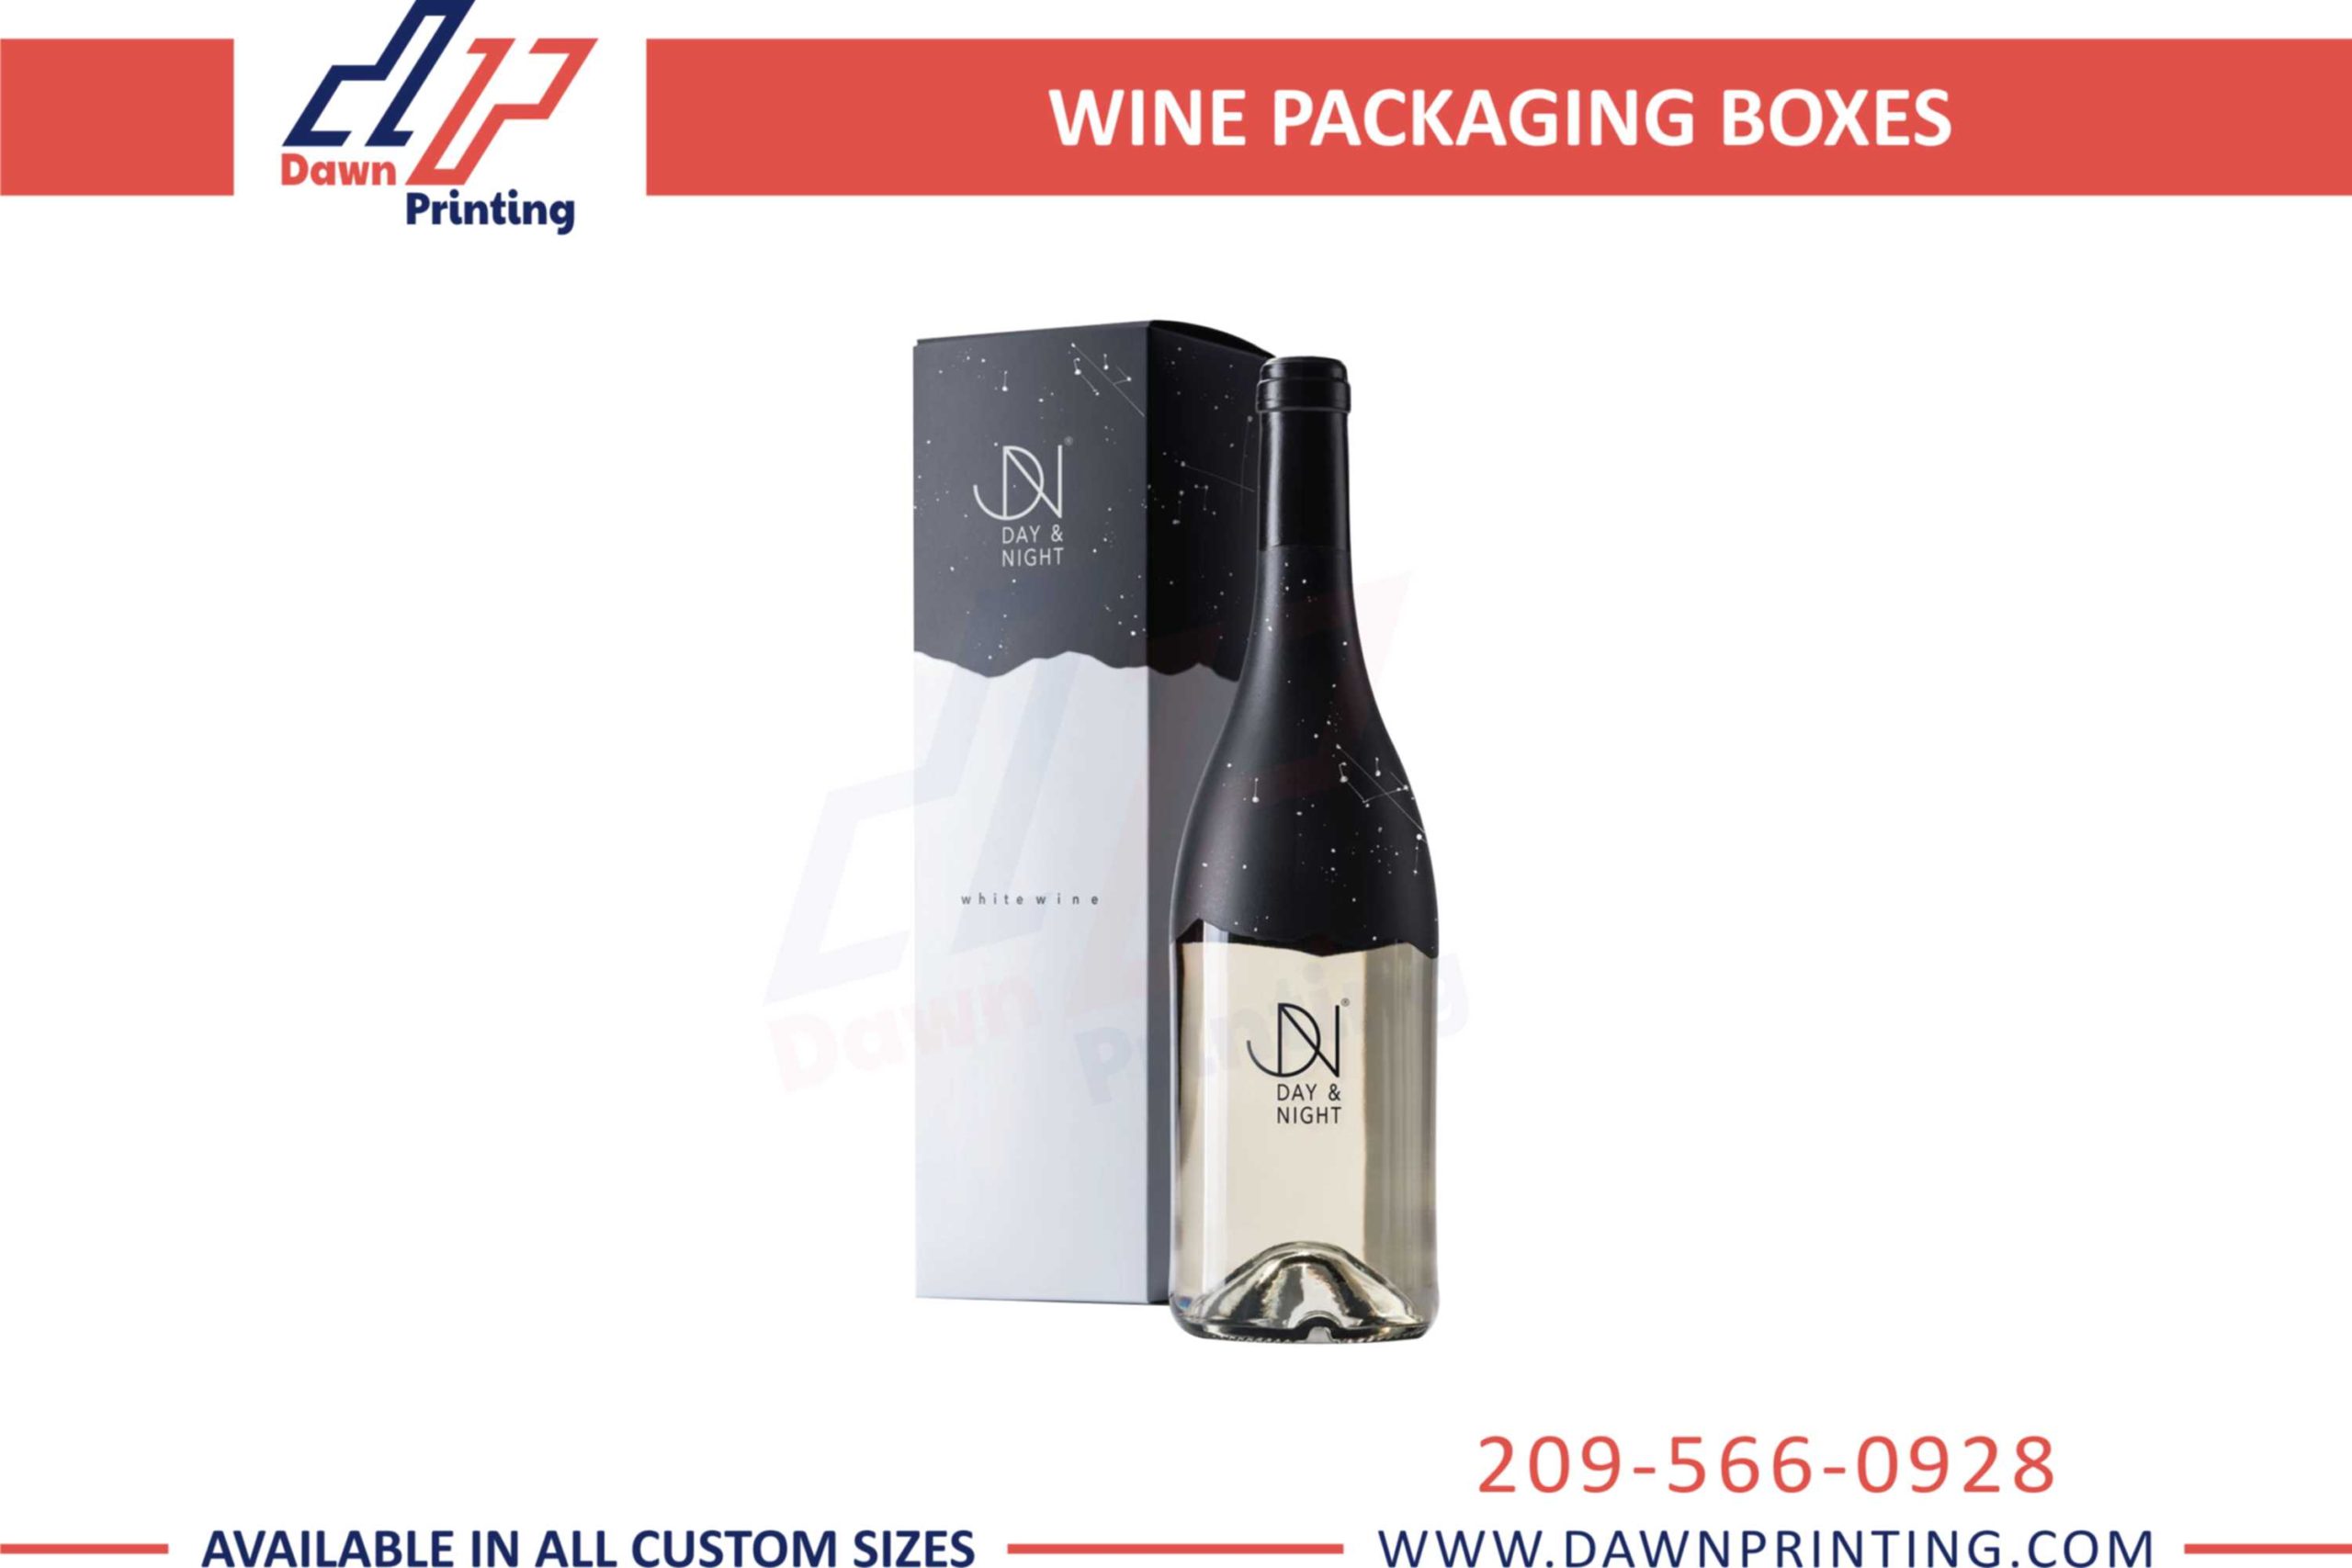 Wine Packaging Boxes - Dawn Printing